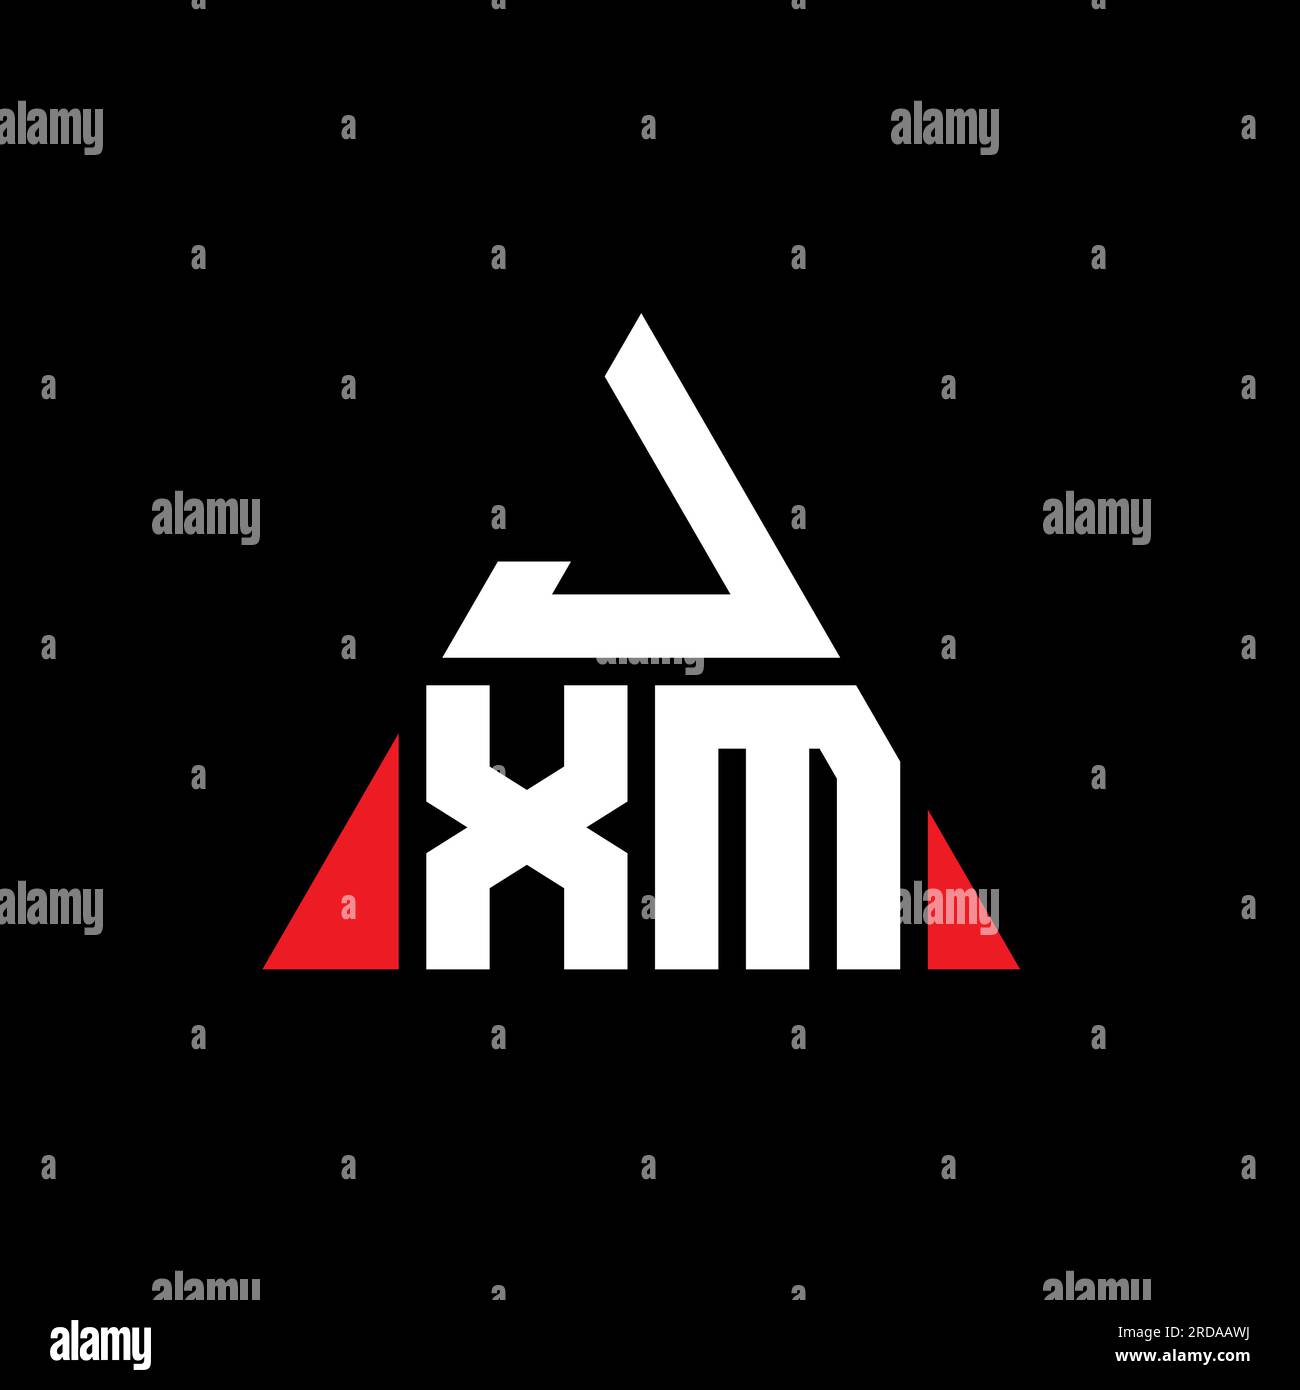 Jxm logo design hi-res stock photography and images - Alamy